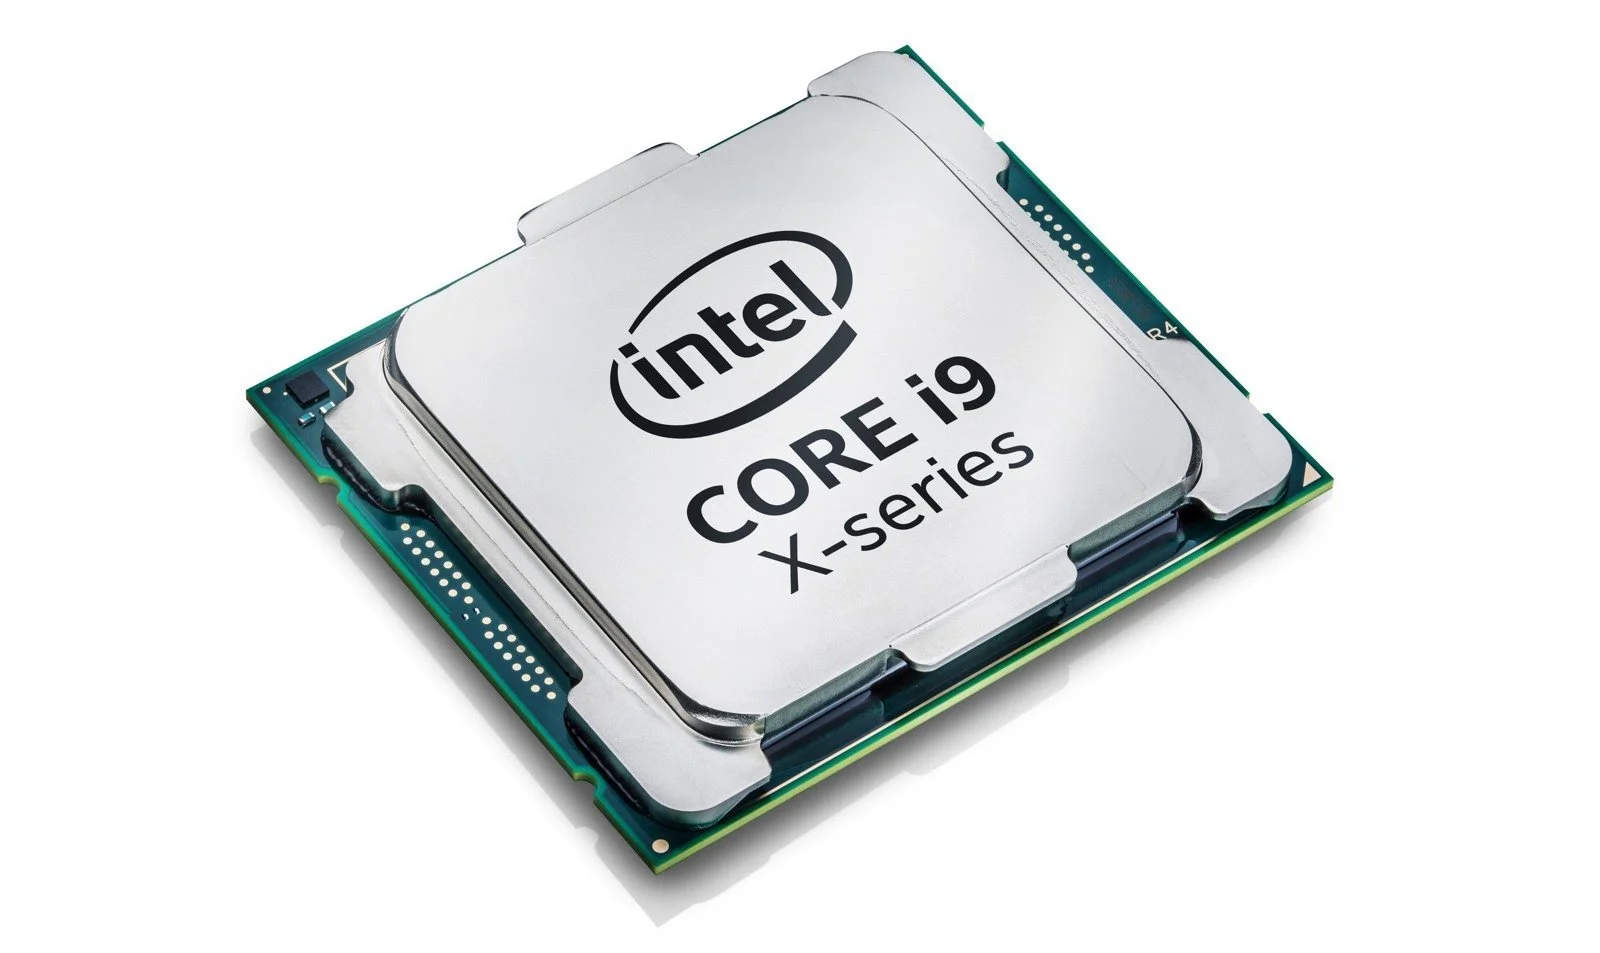 Мощь! Представили топовый Intel Core i9: 18 ядер, 36 потоков, $2 000 - фото 1